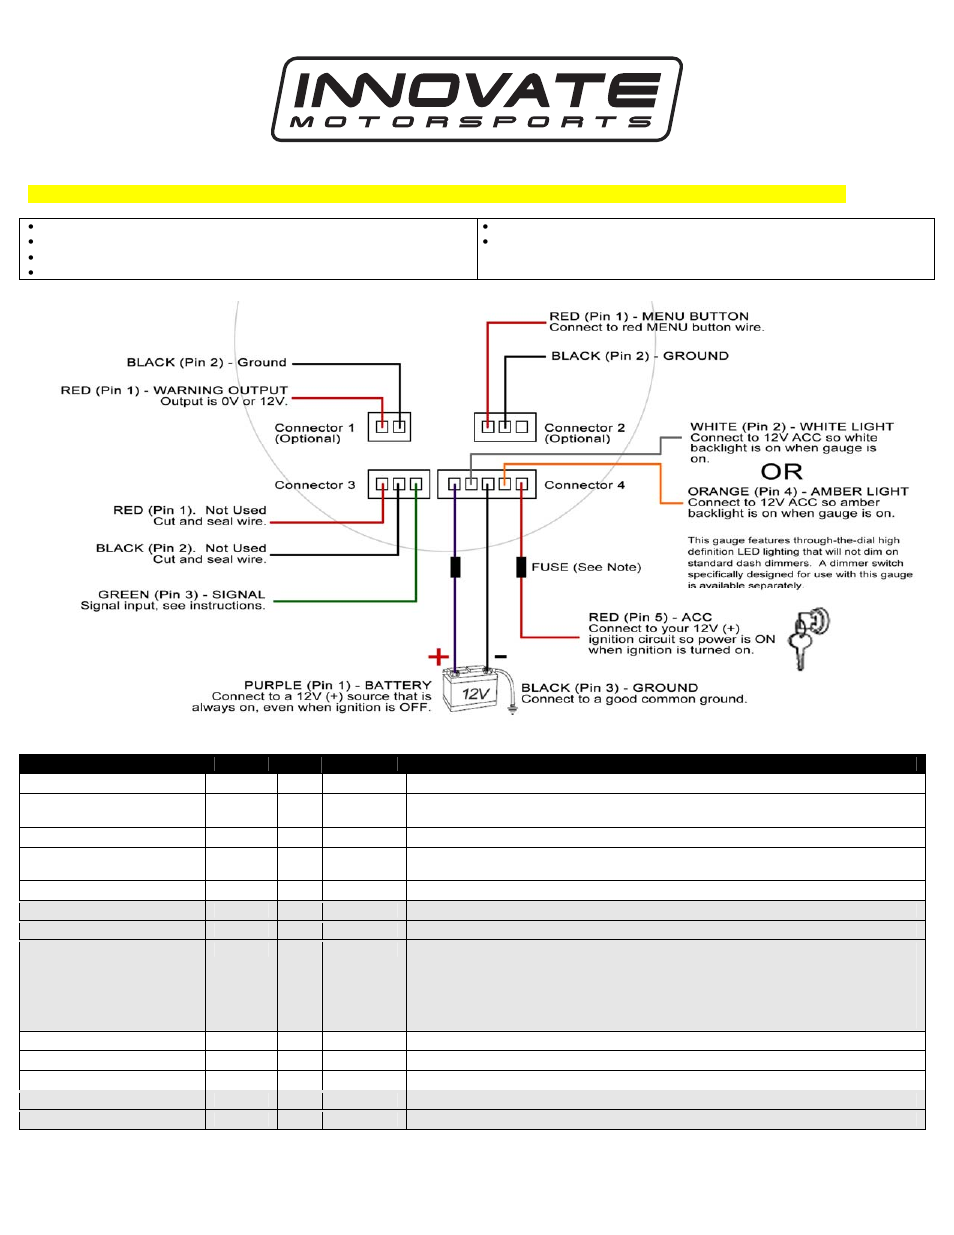 Manual gauge diagram wiring fuel Gauge Technical